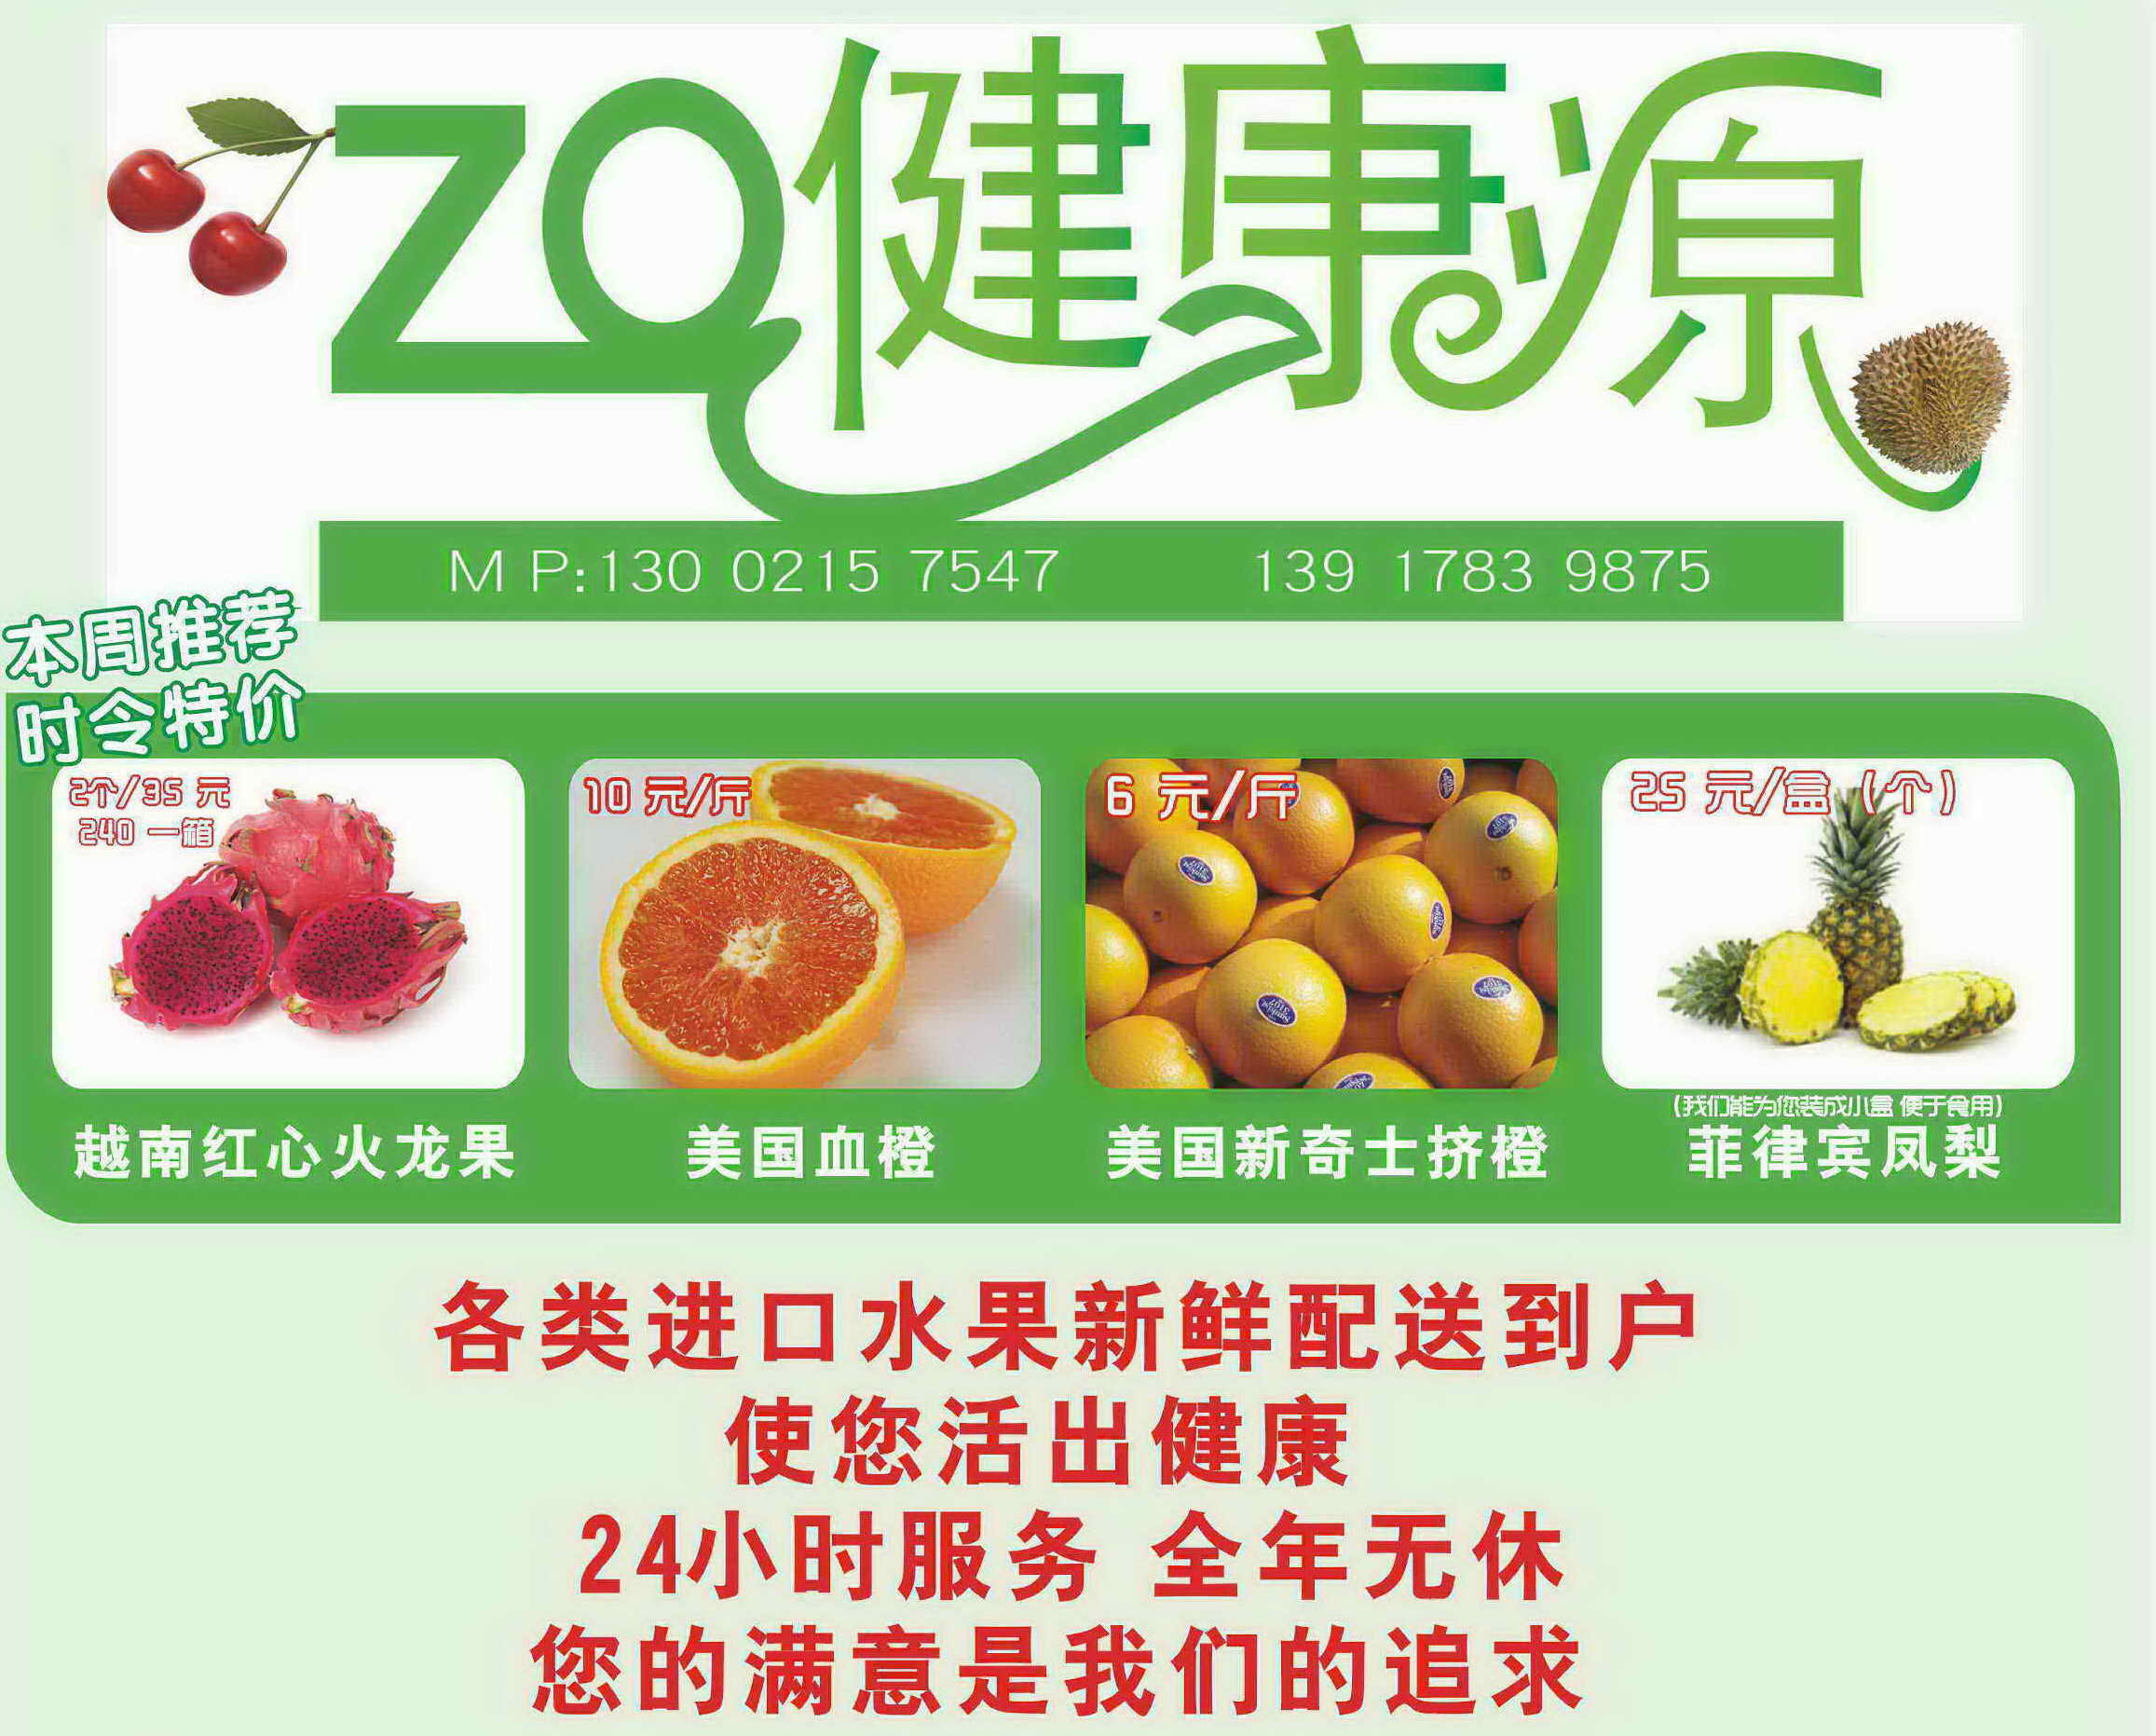 ZQ健康源--各类进口水果新鲜配送到户,使您活